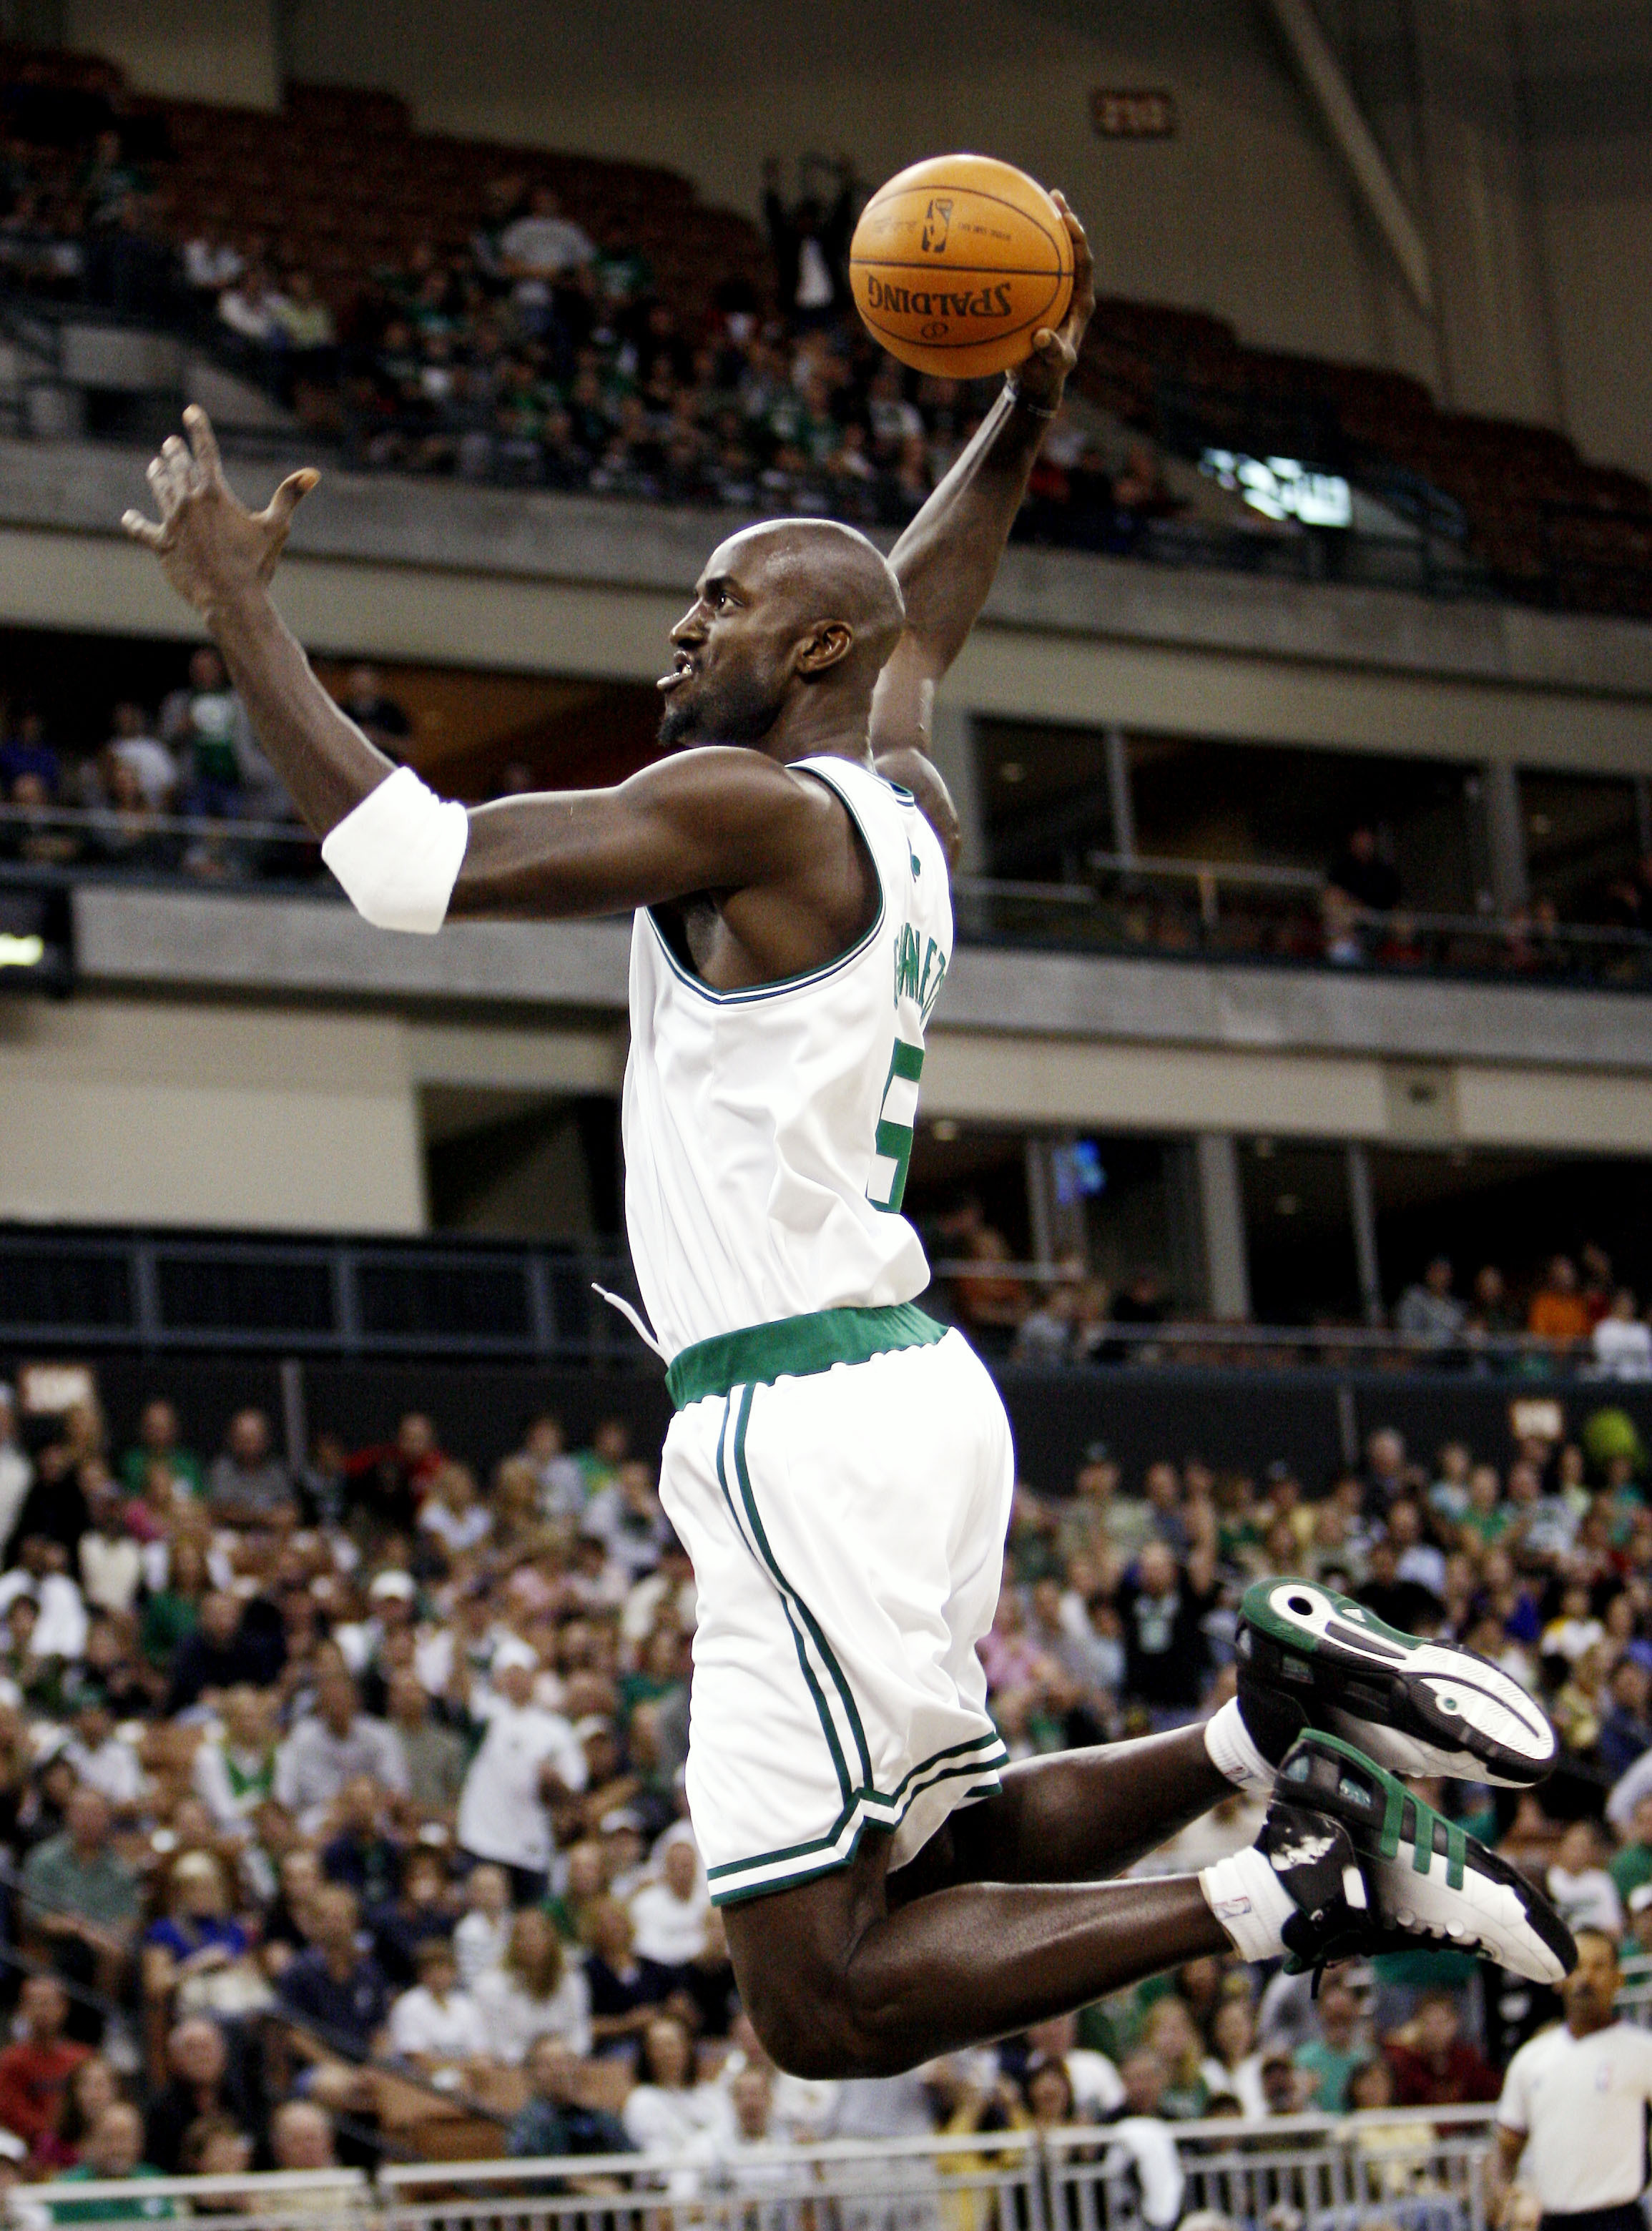 Kevin Garnett calls on Celtics to retire Ray Allen's number next - NBC  Sports